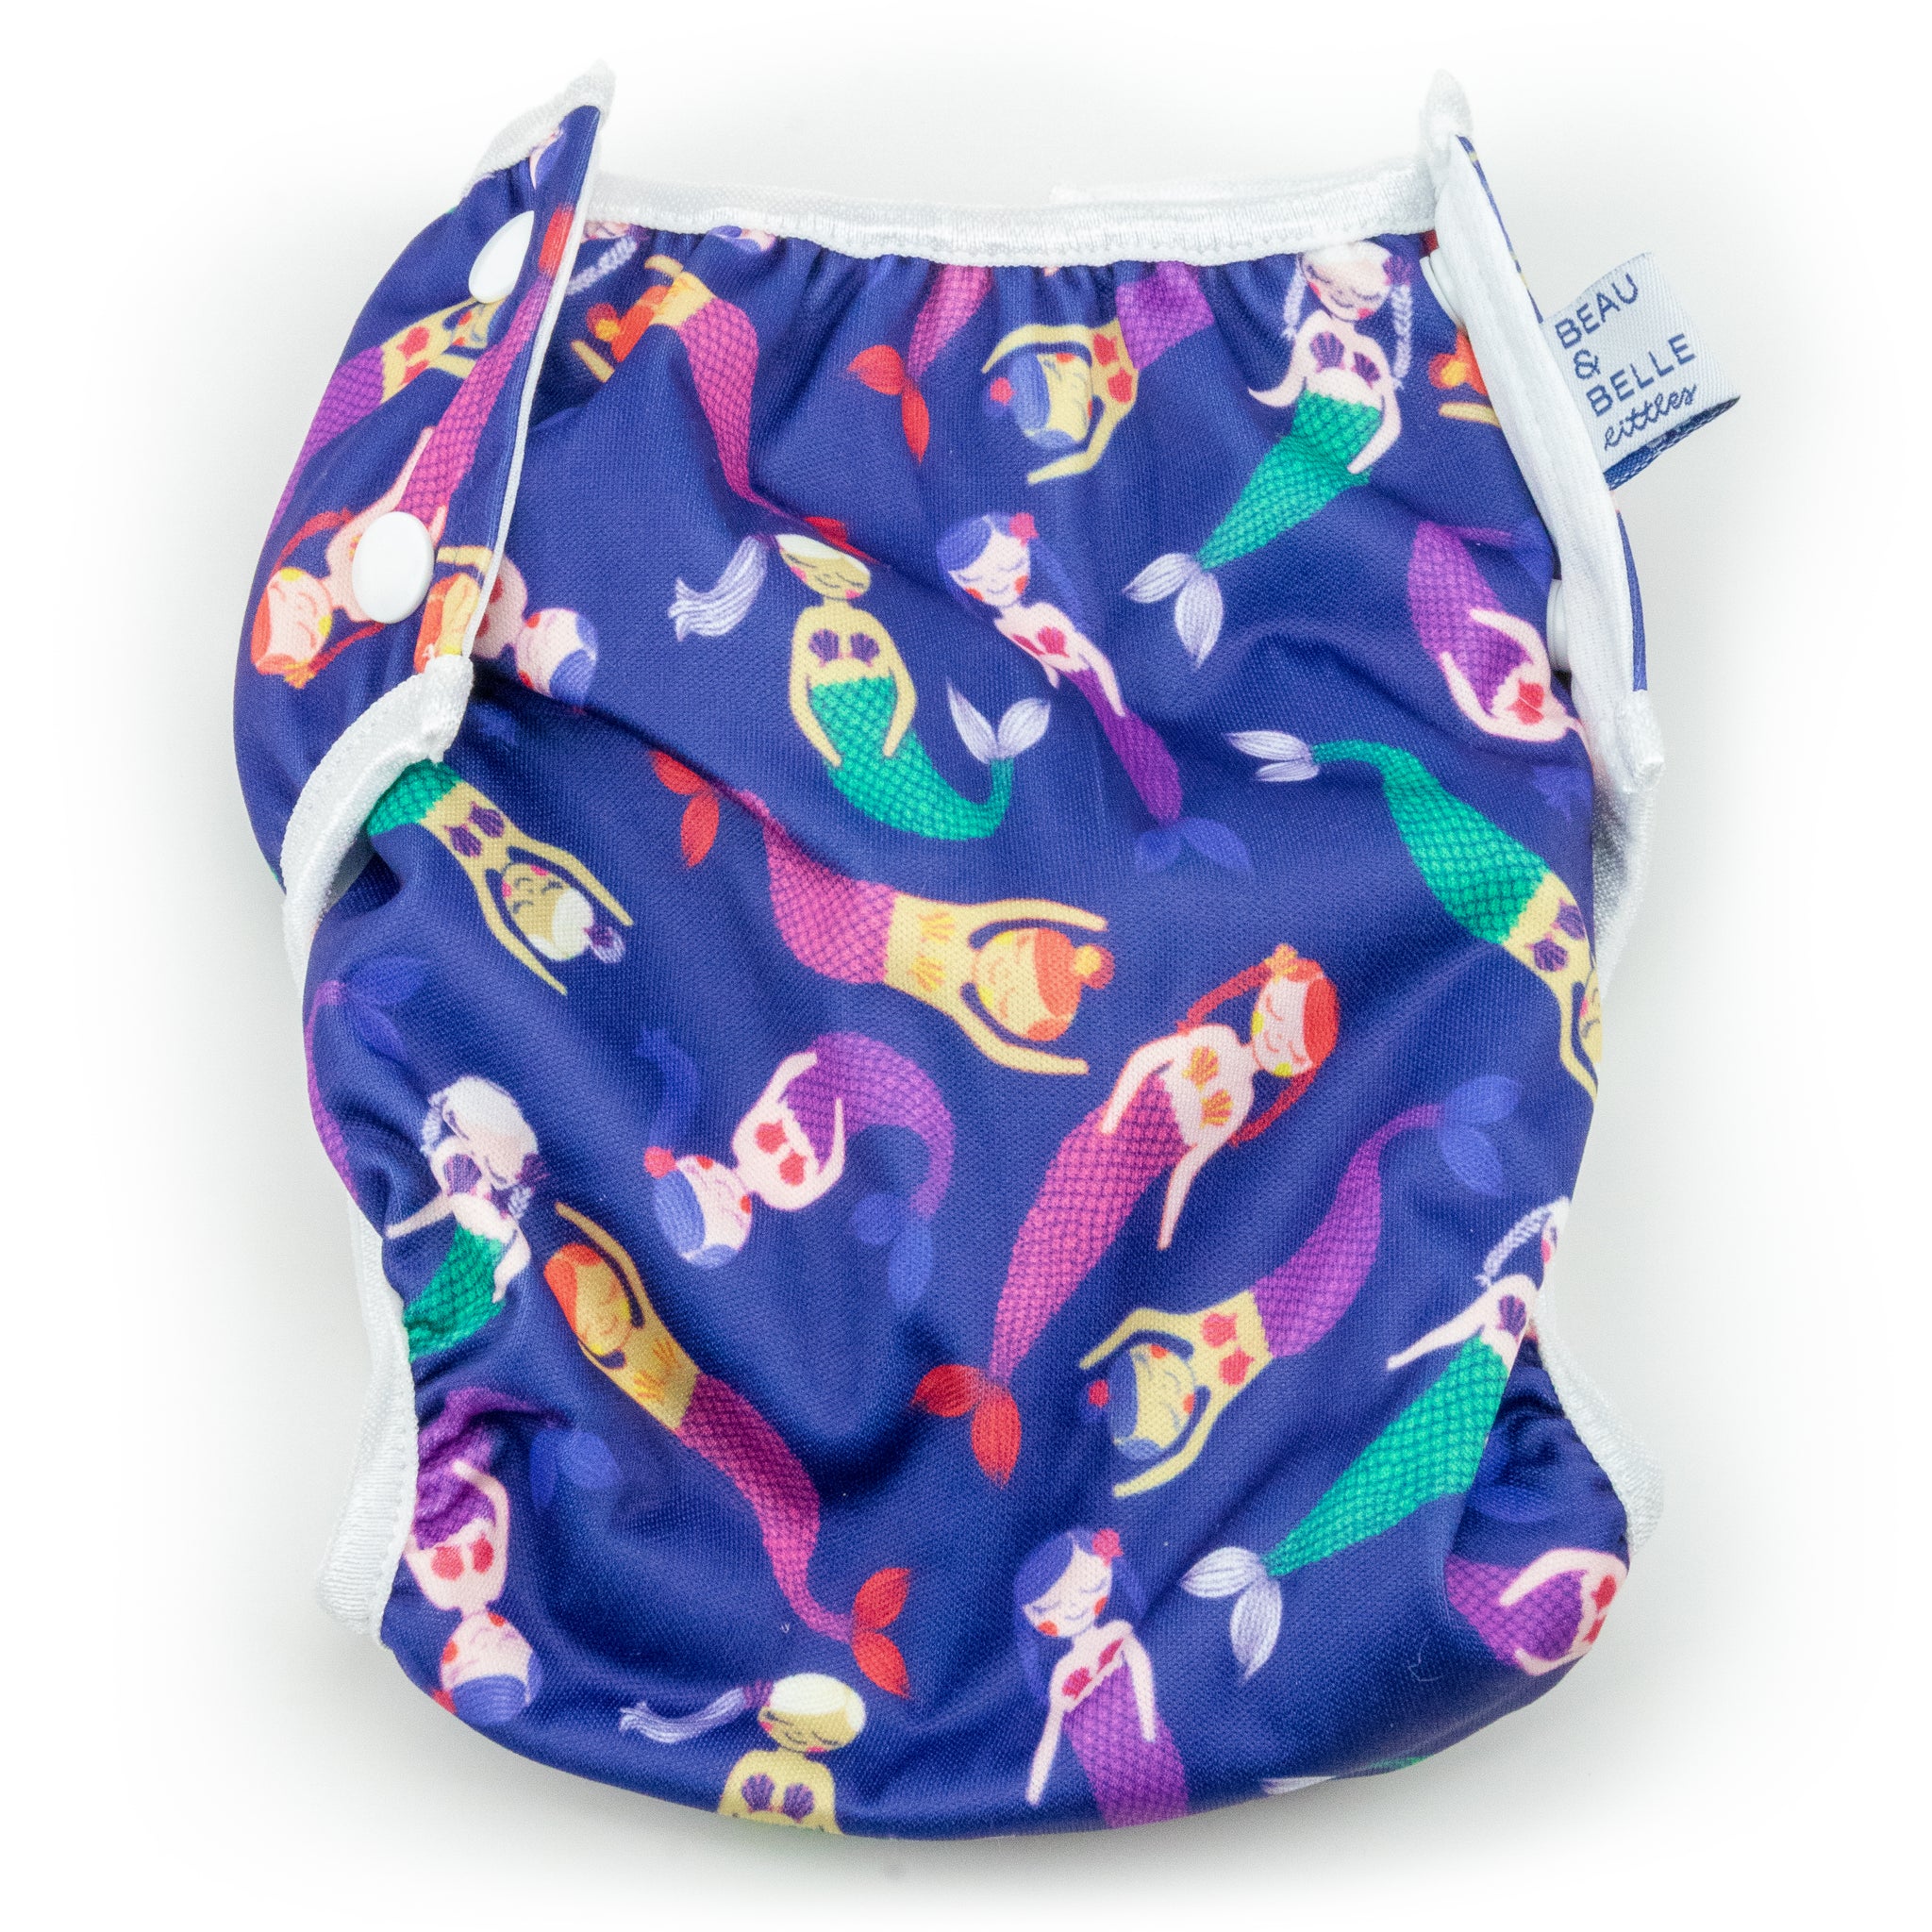 Beau and Belle Littles Swim Diaper, Regular Size, dark purple with mermaids, flat lay, back view